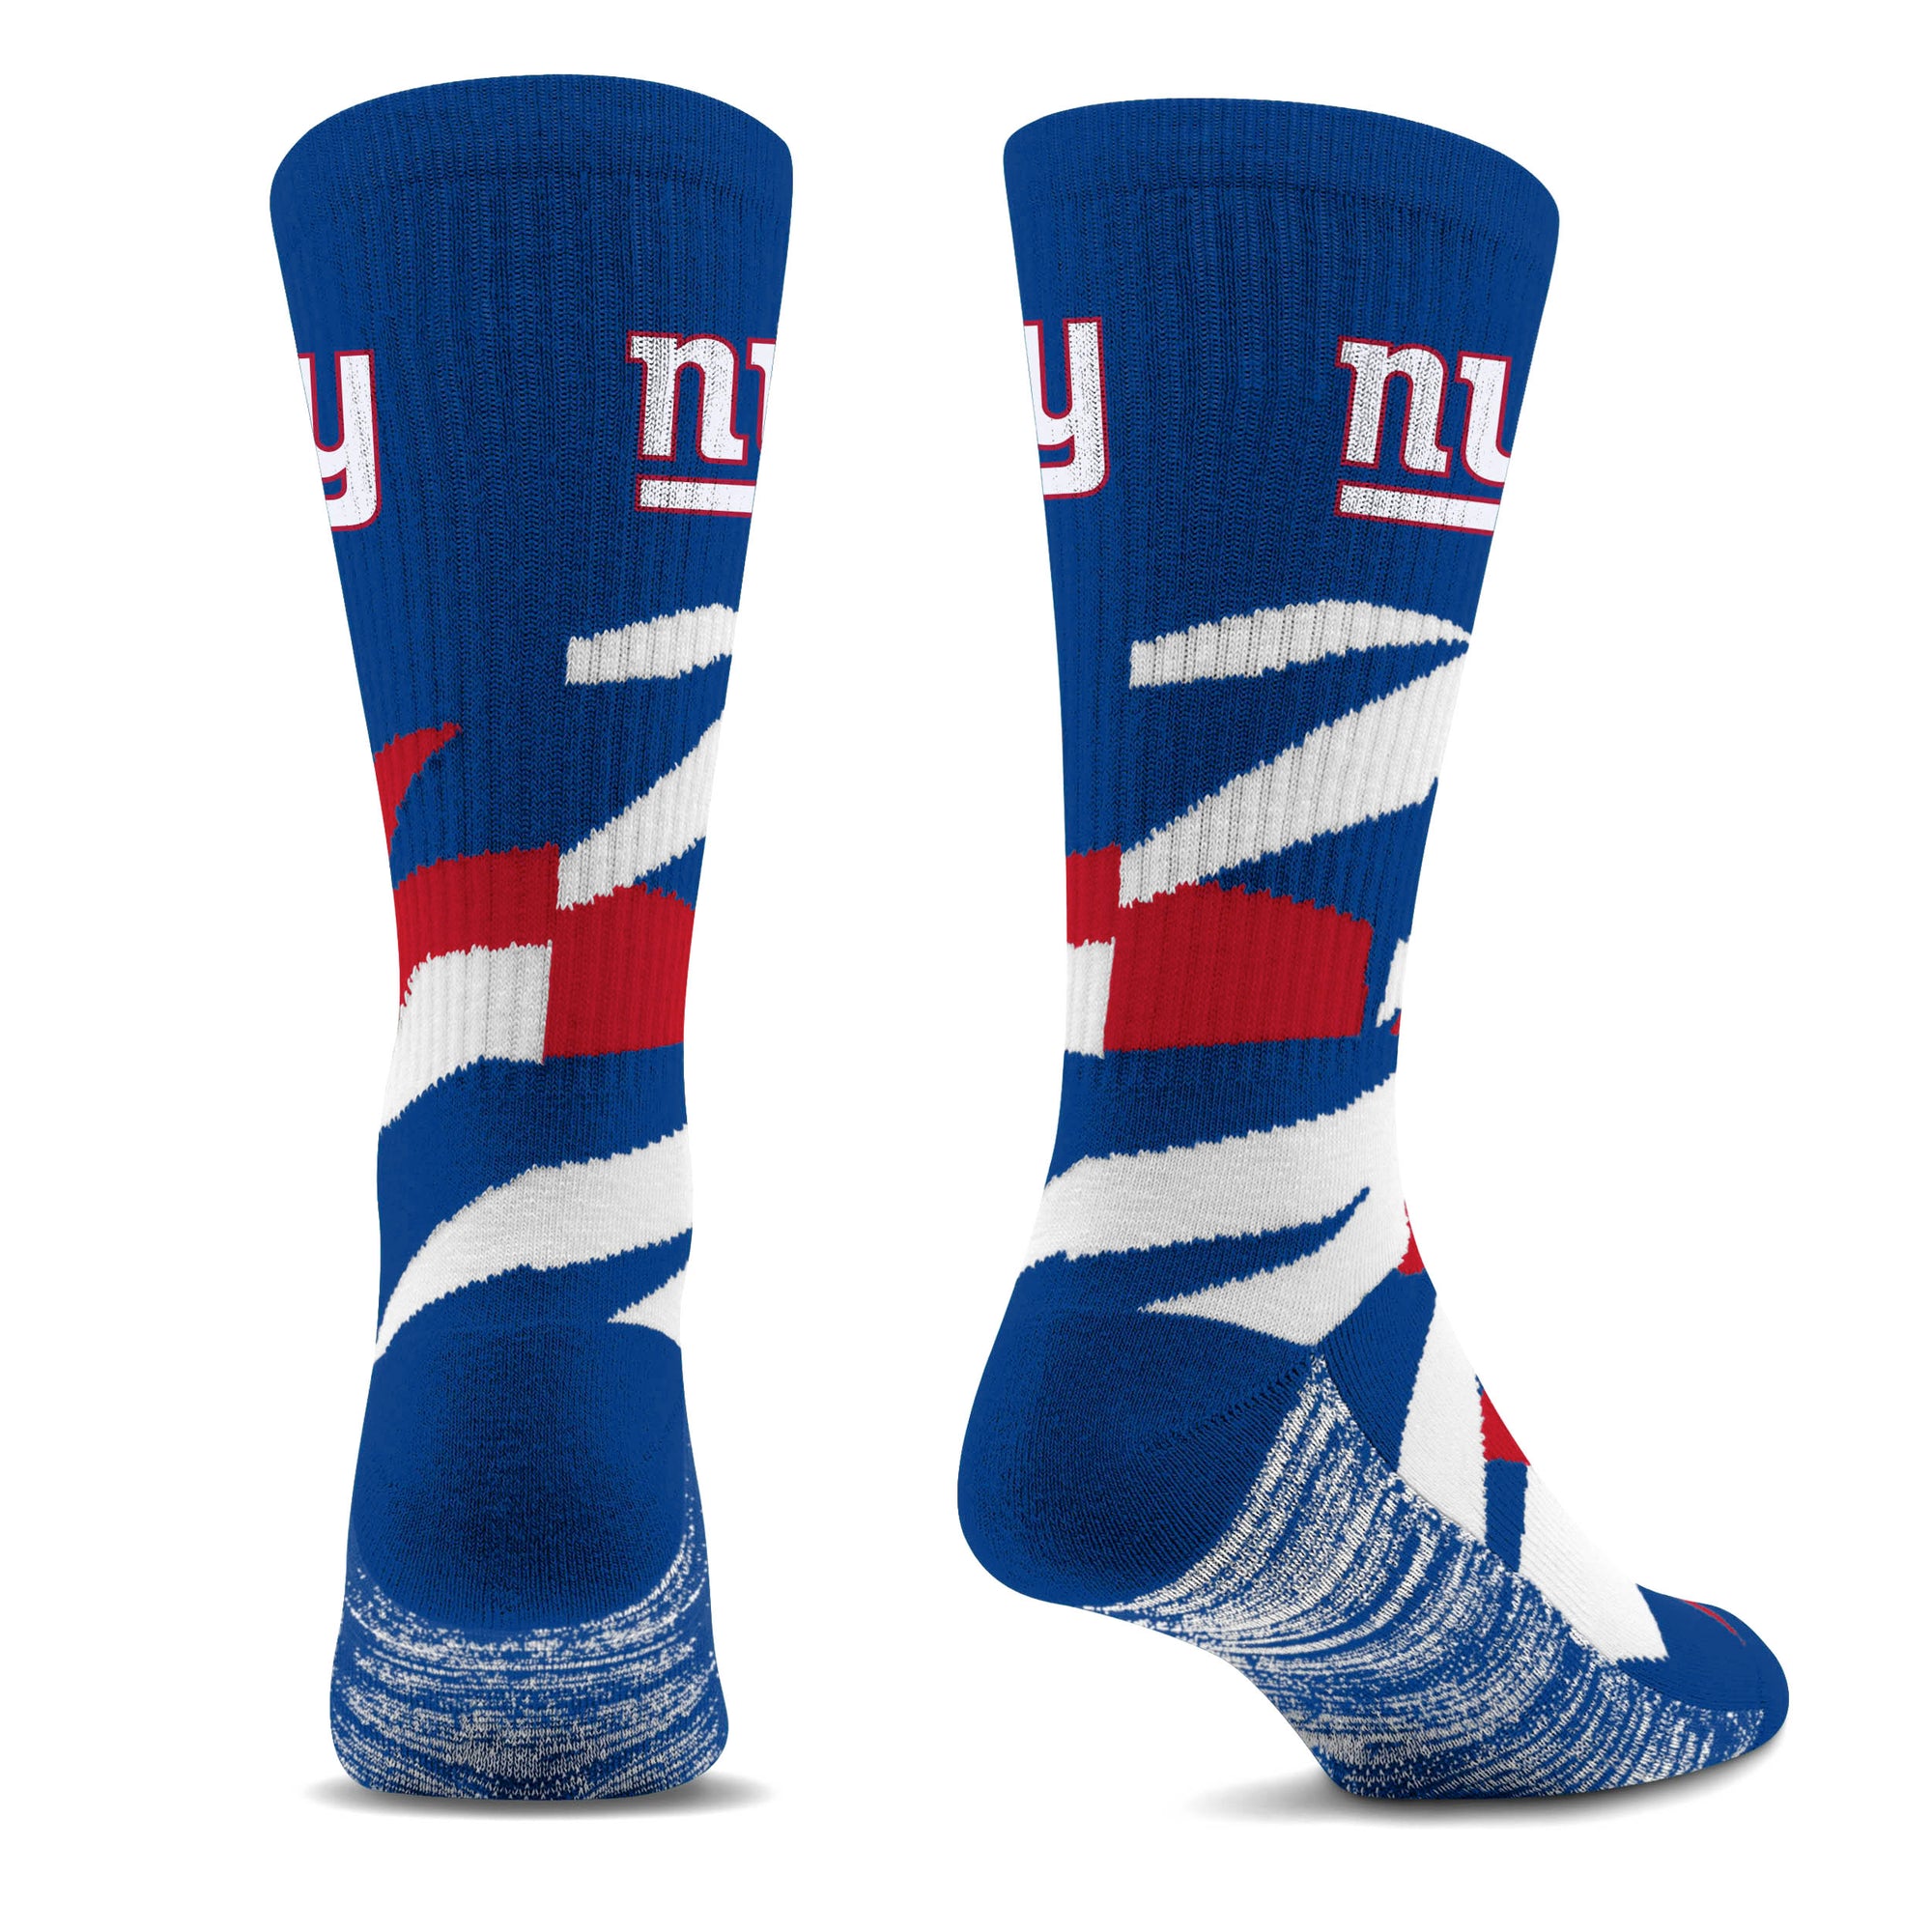 New York Giants - Breakout Premium Crew Socks